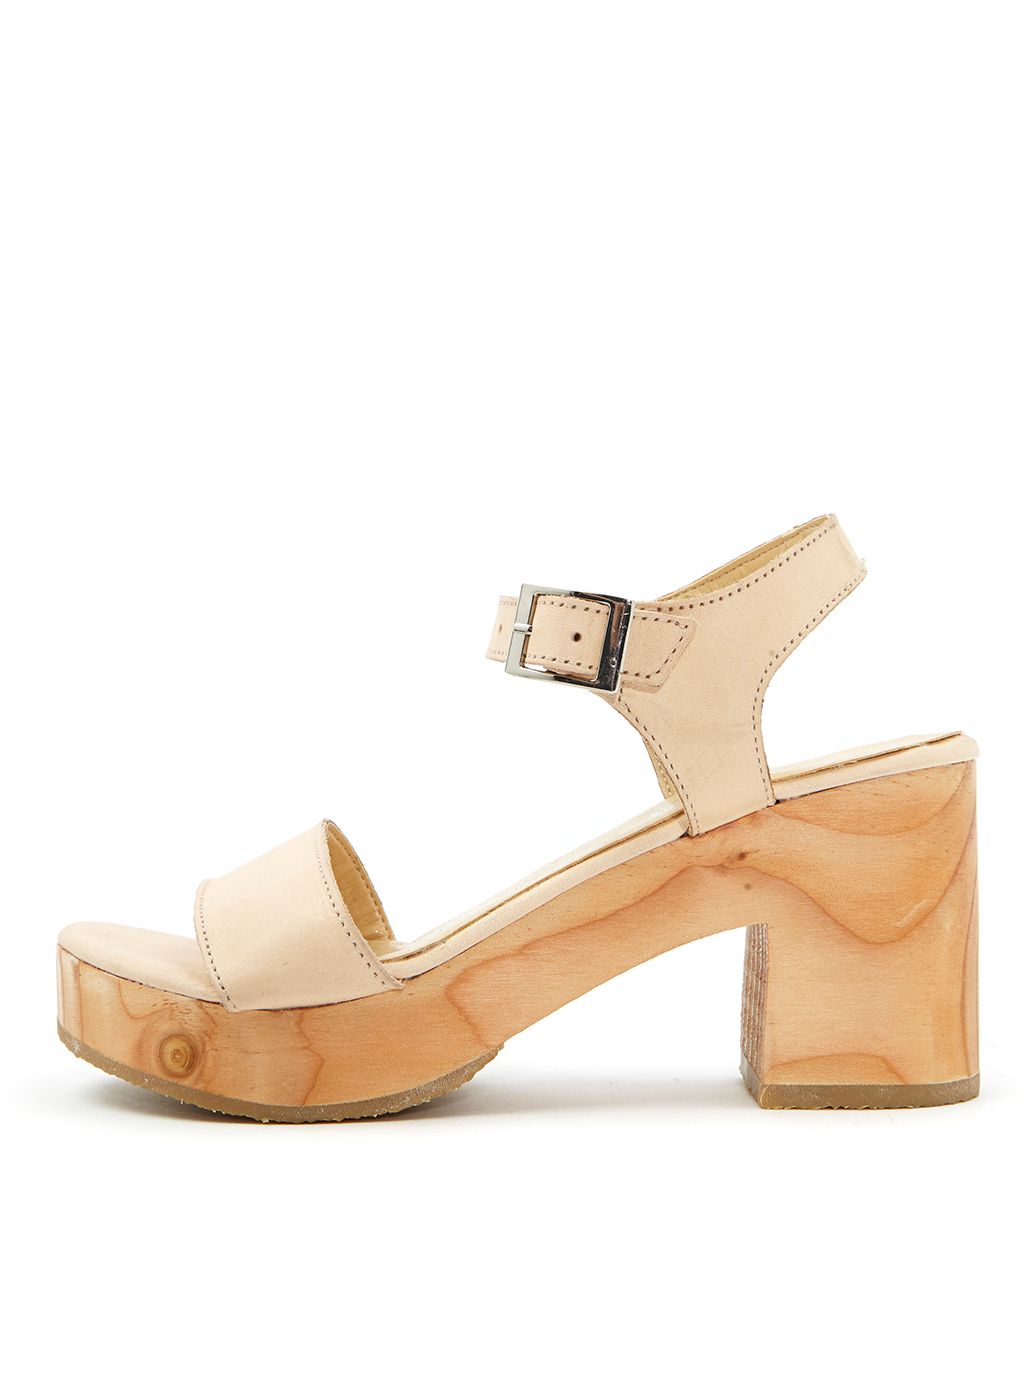 Wooden Heel Sandal | American Apparel